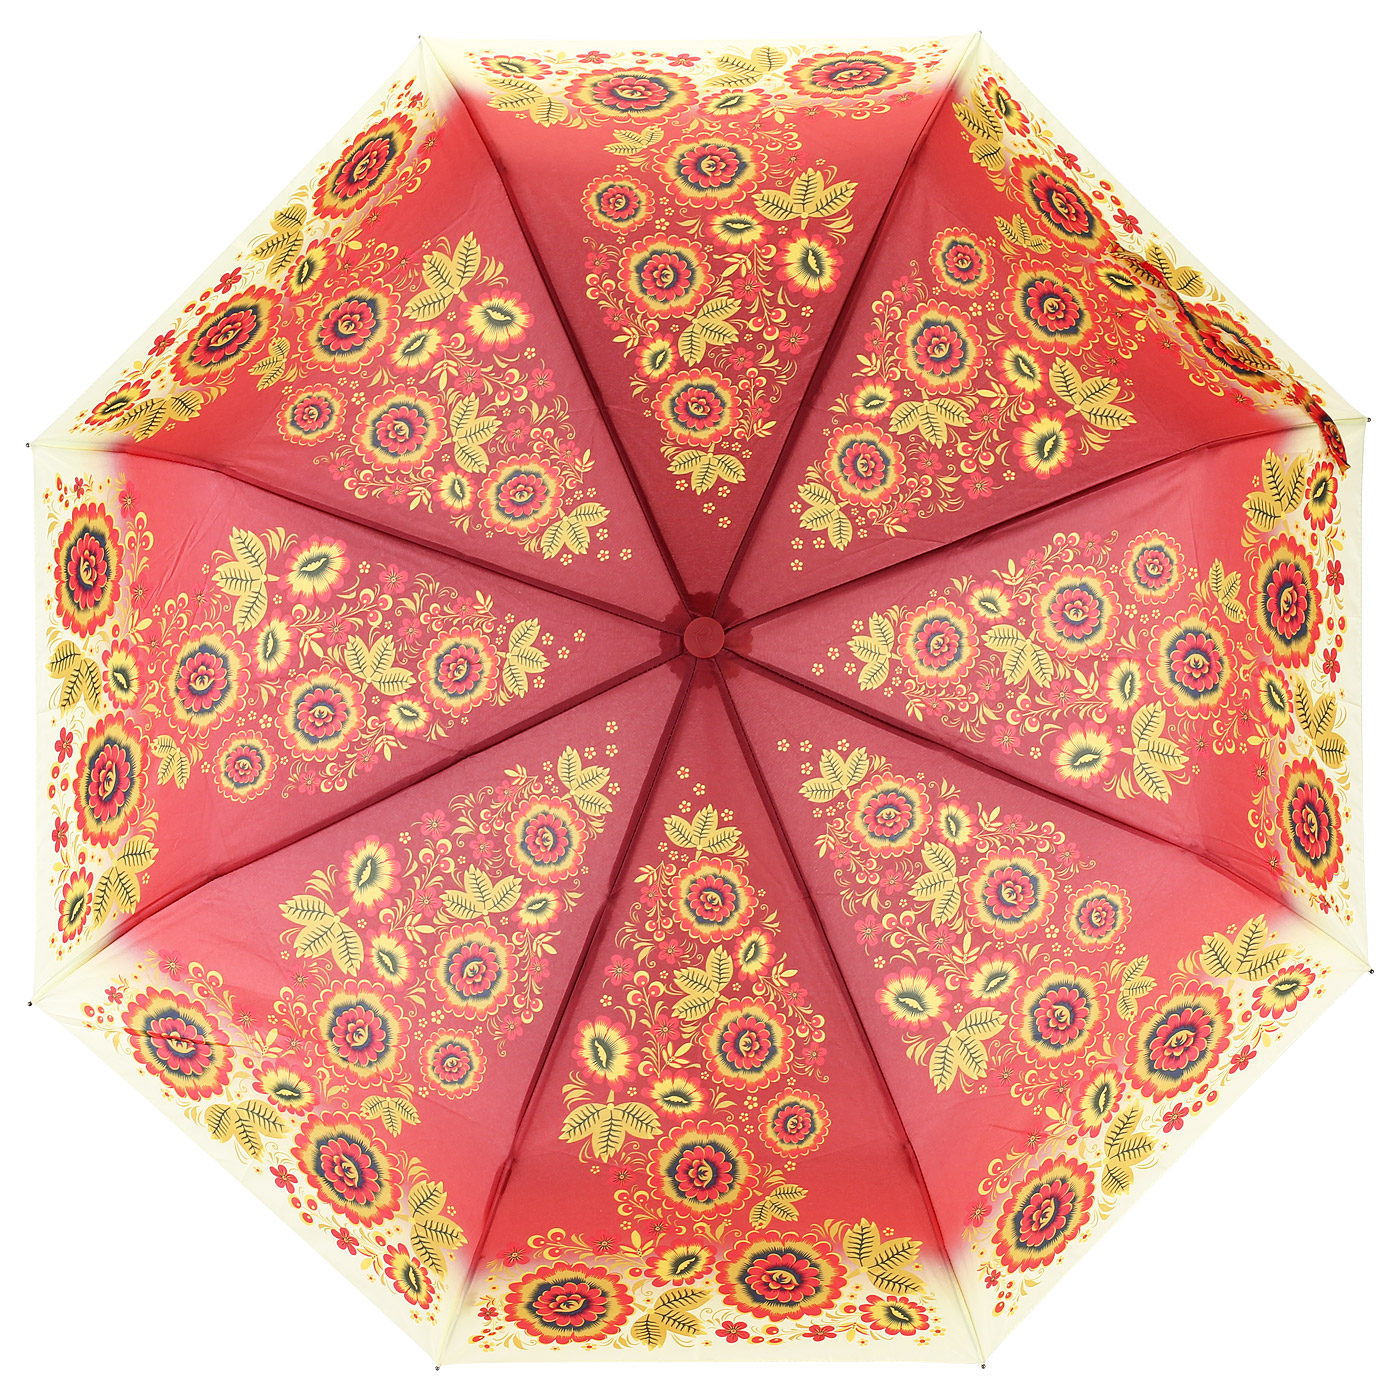 Компактный зонт-автомат Raindrops 